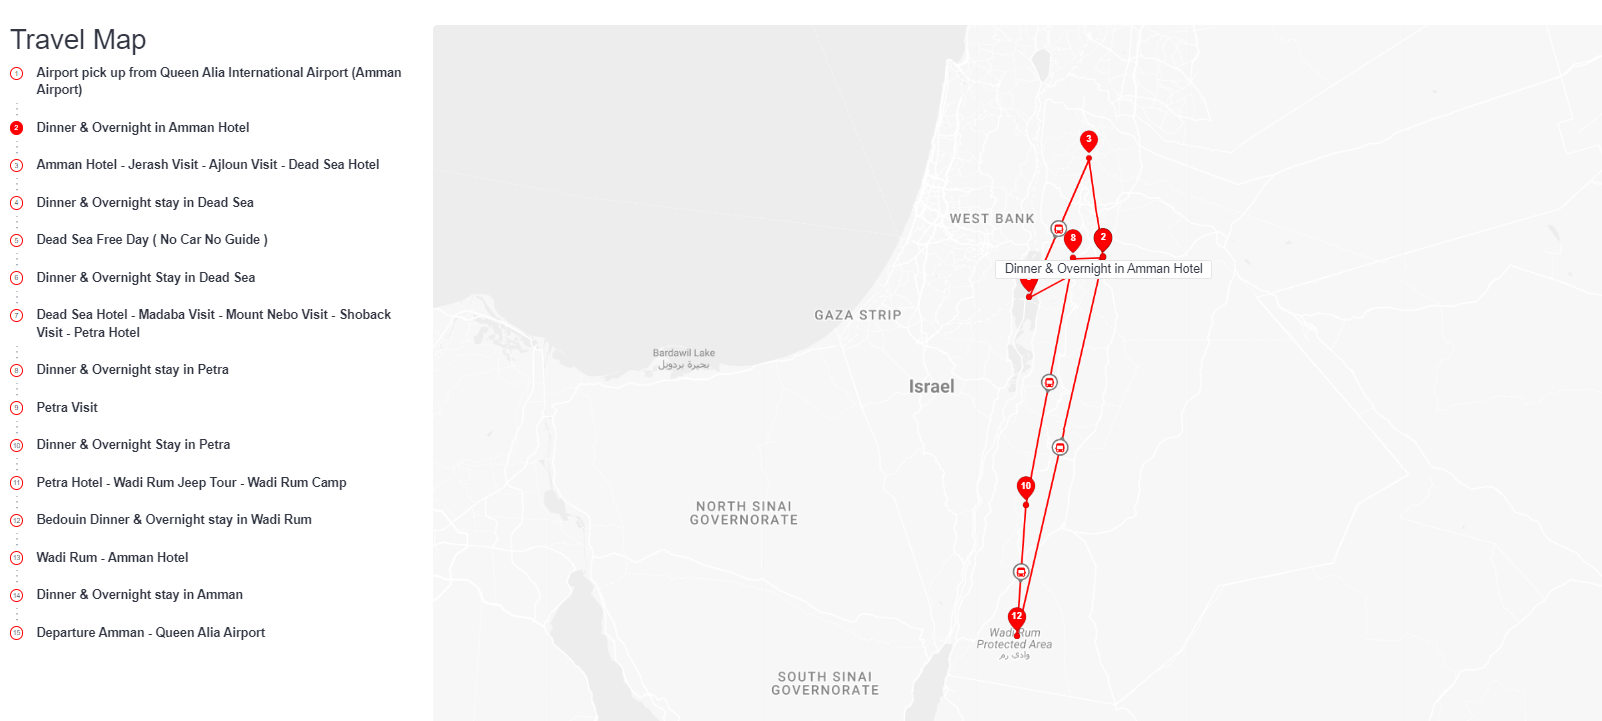 tourhub | Travco Jordan | Adventures of Jordan with 5* accommodation | Tour Map